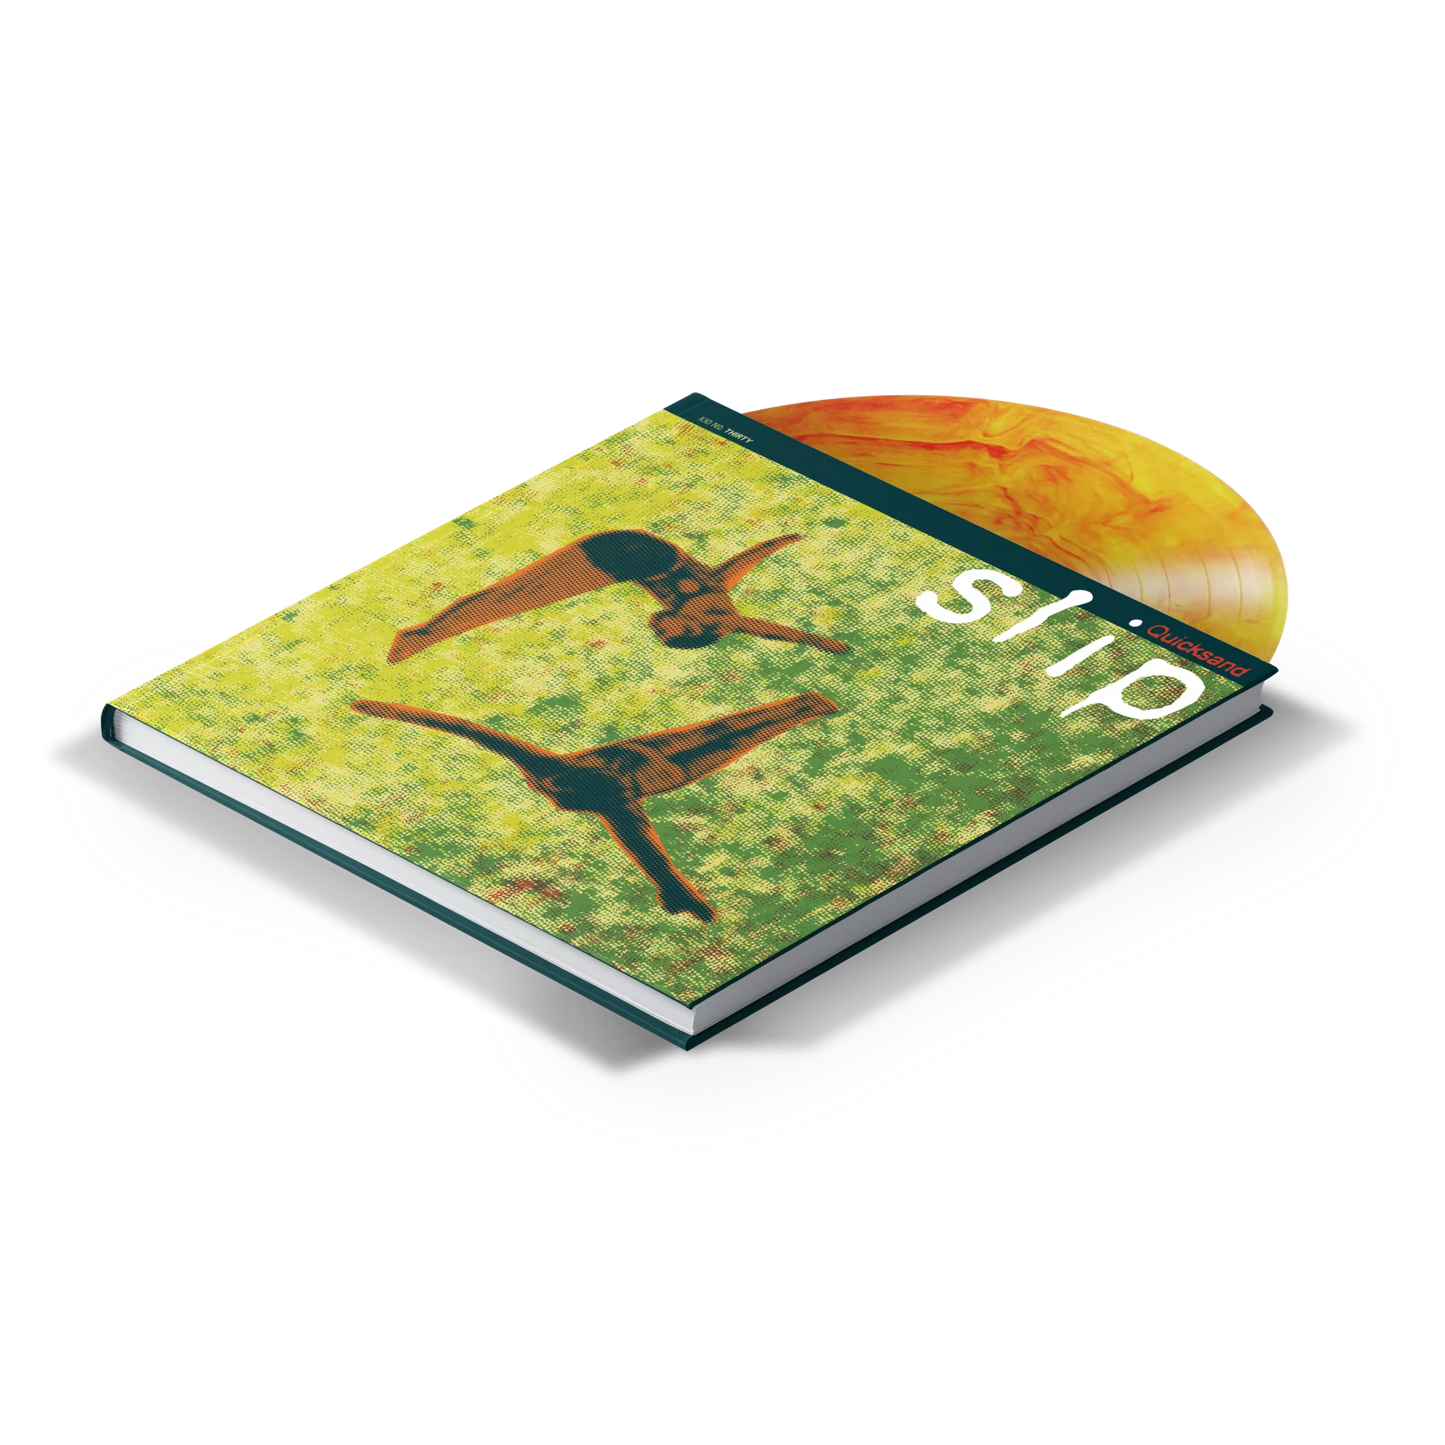 Quicksand  "Slip" Deluxe Book